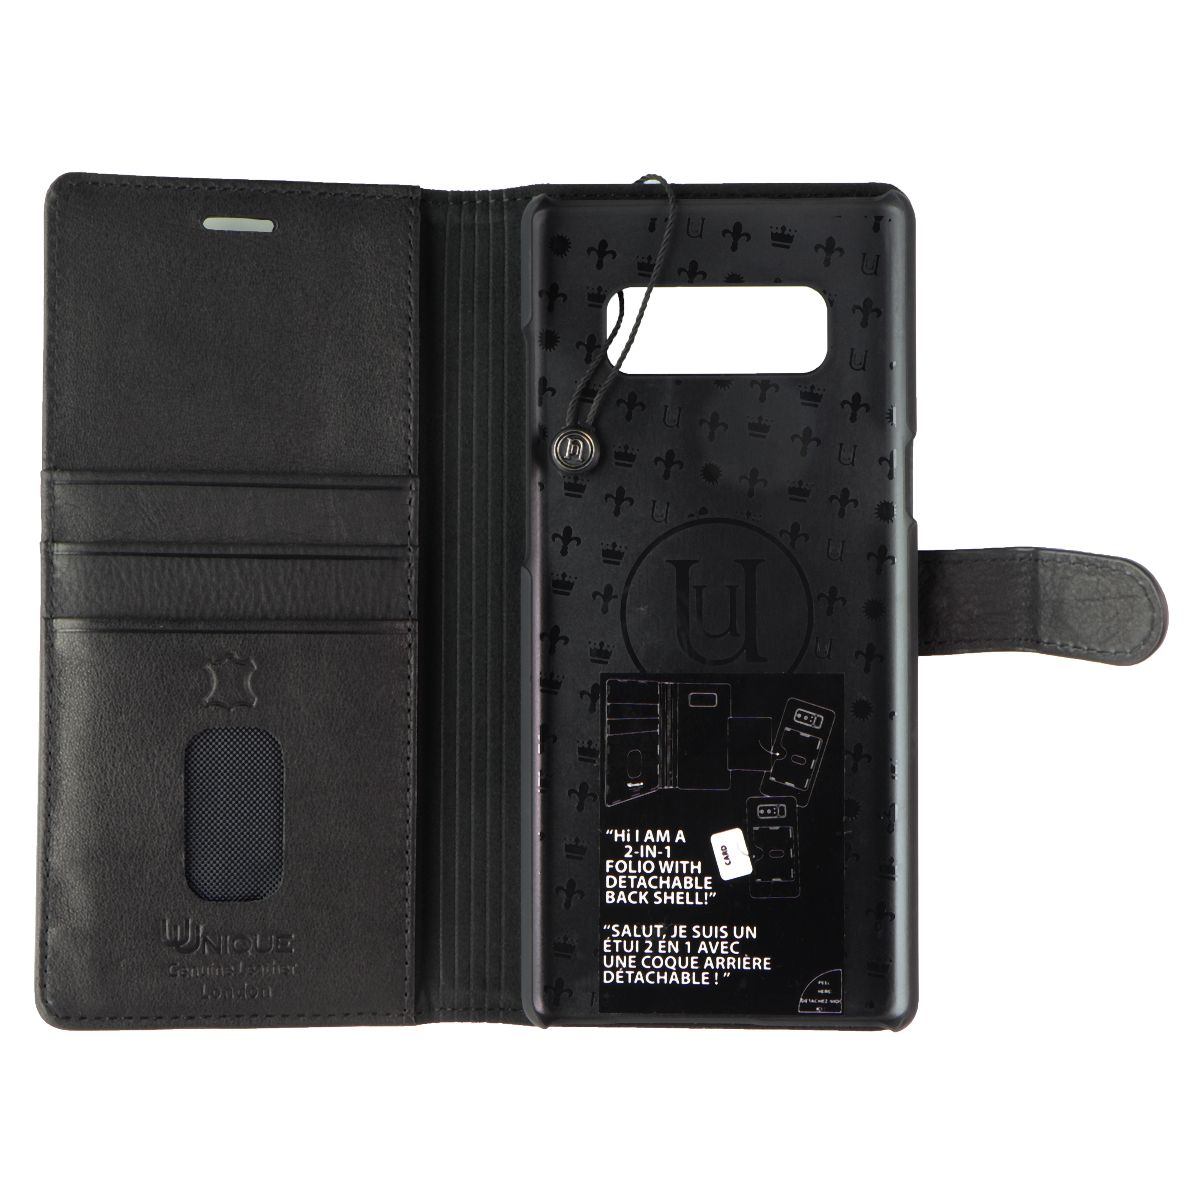 Unique London 2-in-1 Leather Folio + Case for Galaxy Note8 - Black